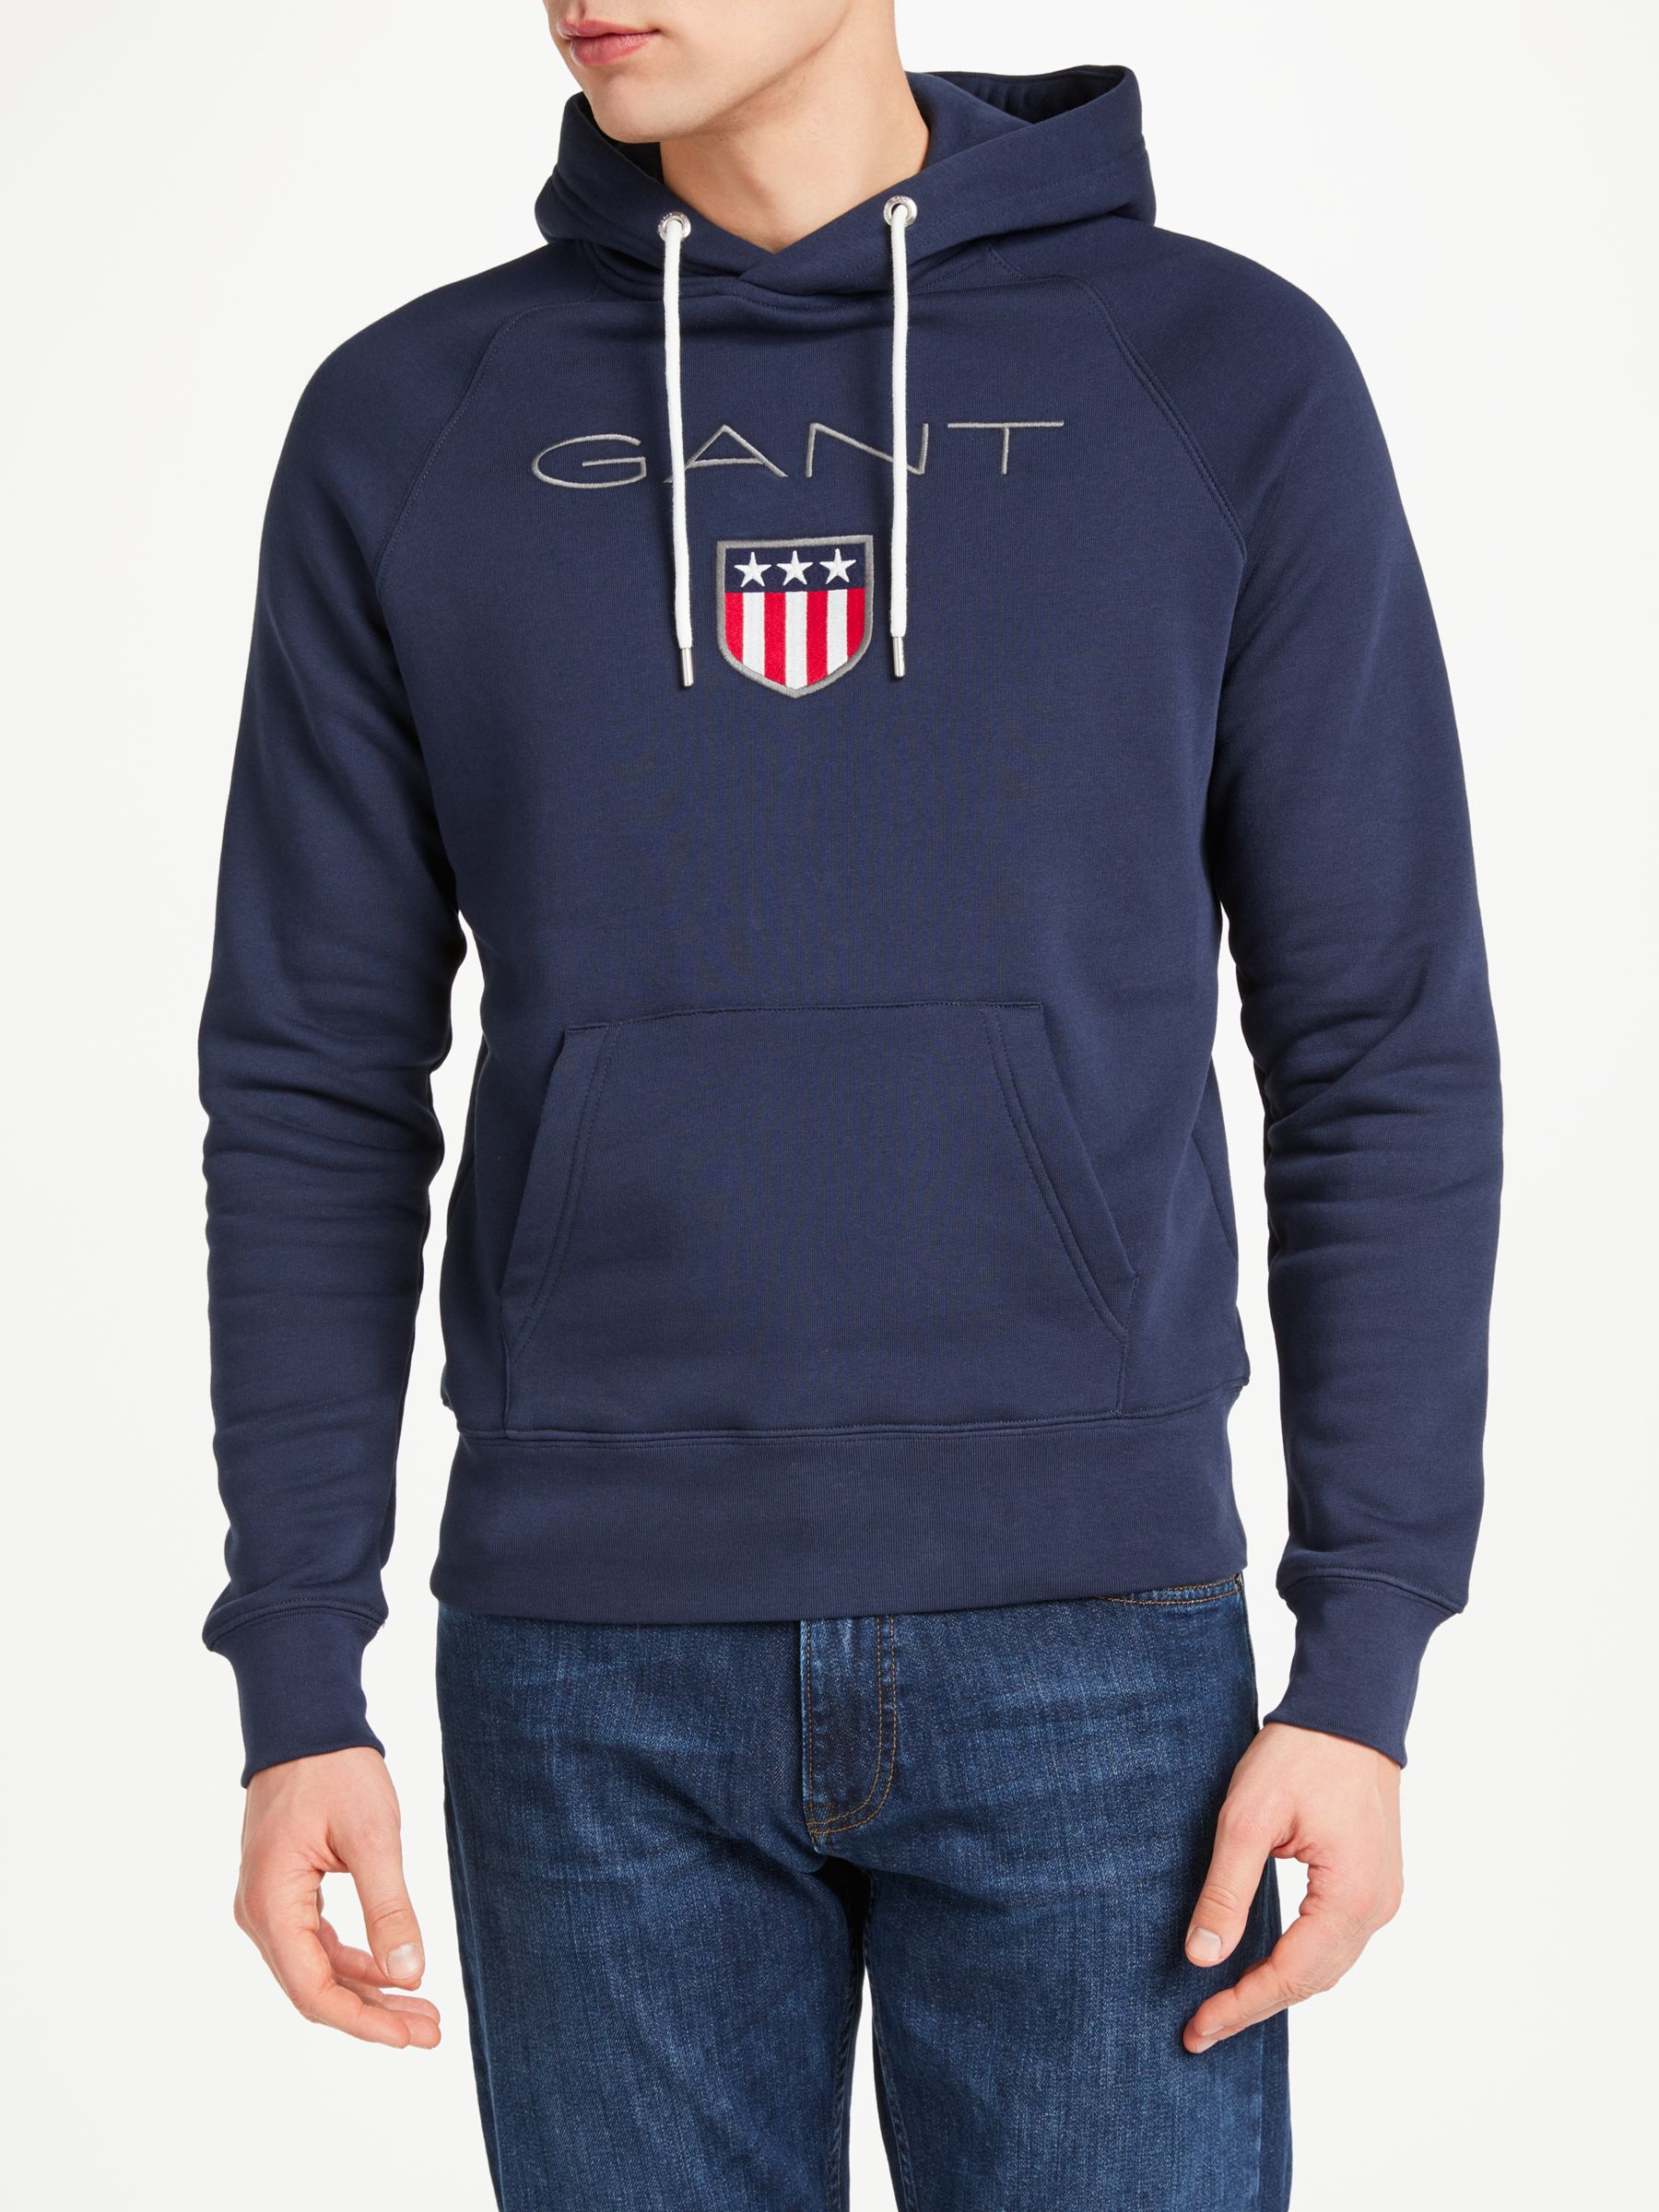 GANT Shield Embroidered Pullover Sweatshirt, Navy, M